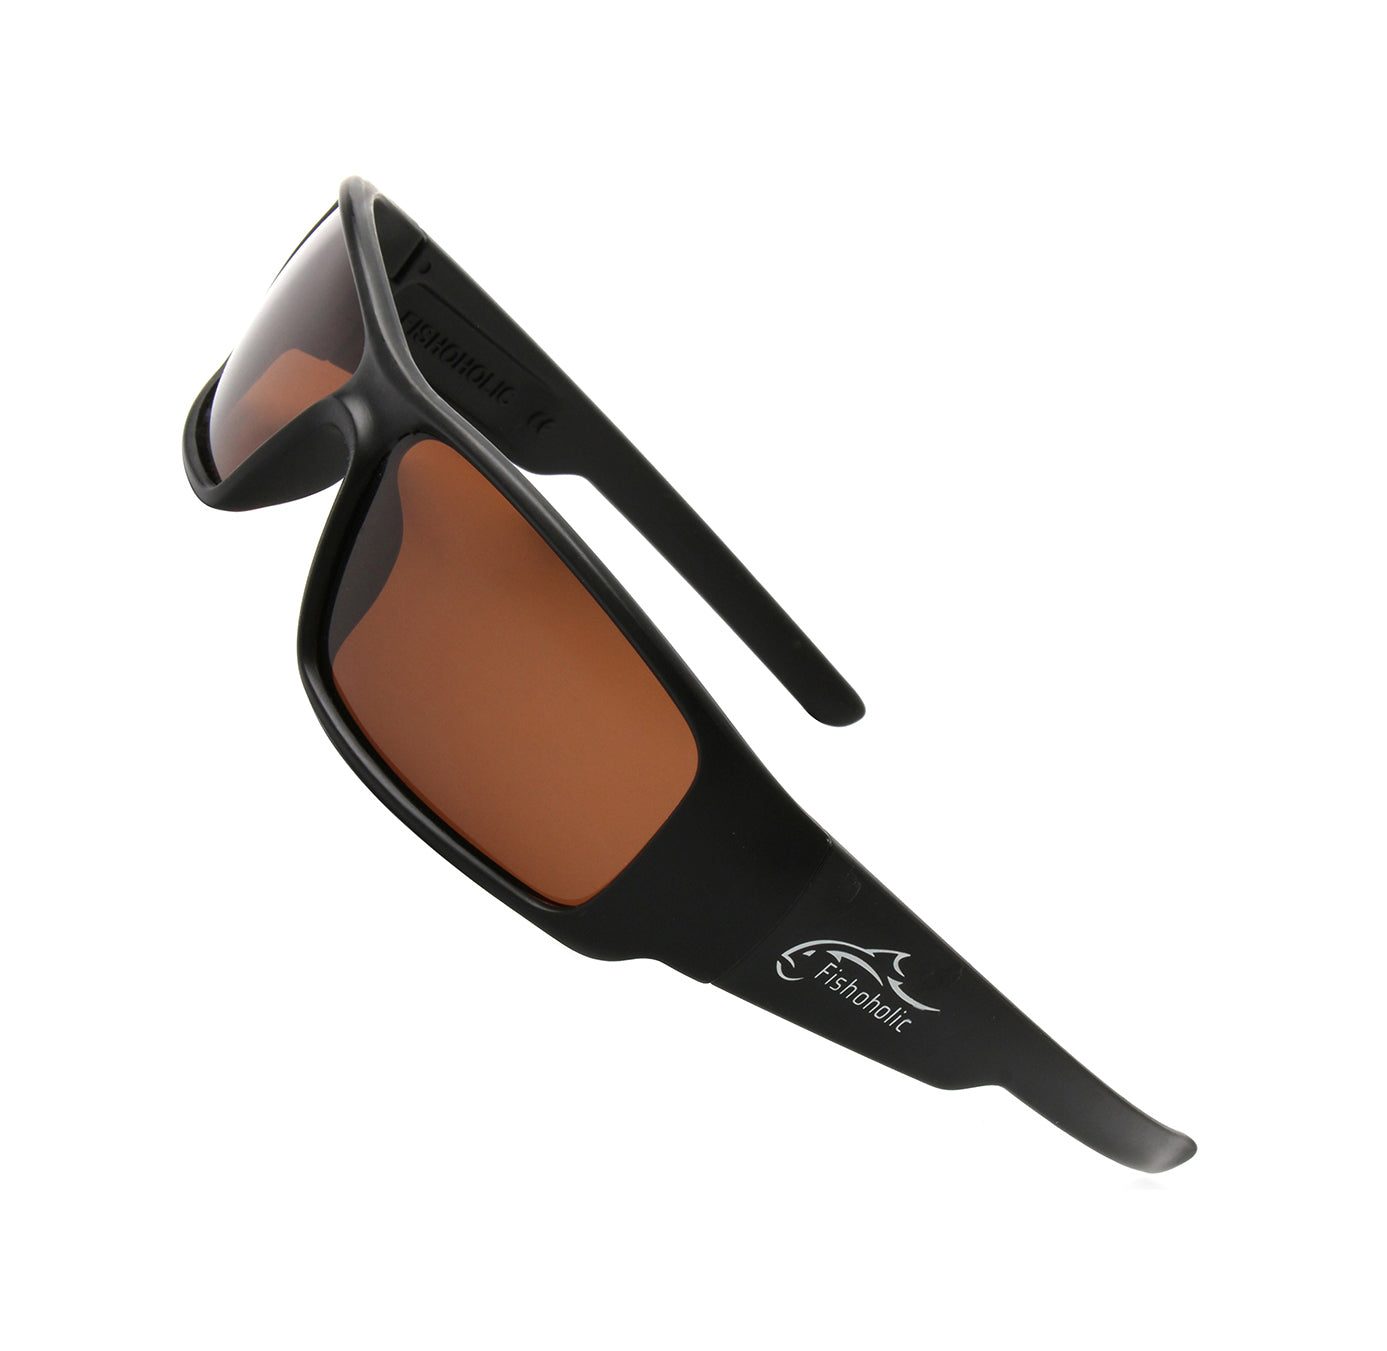 Fishoholic MB-Amb Sunglasses - UV400 Polarized Sunglasses w' Case & Po